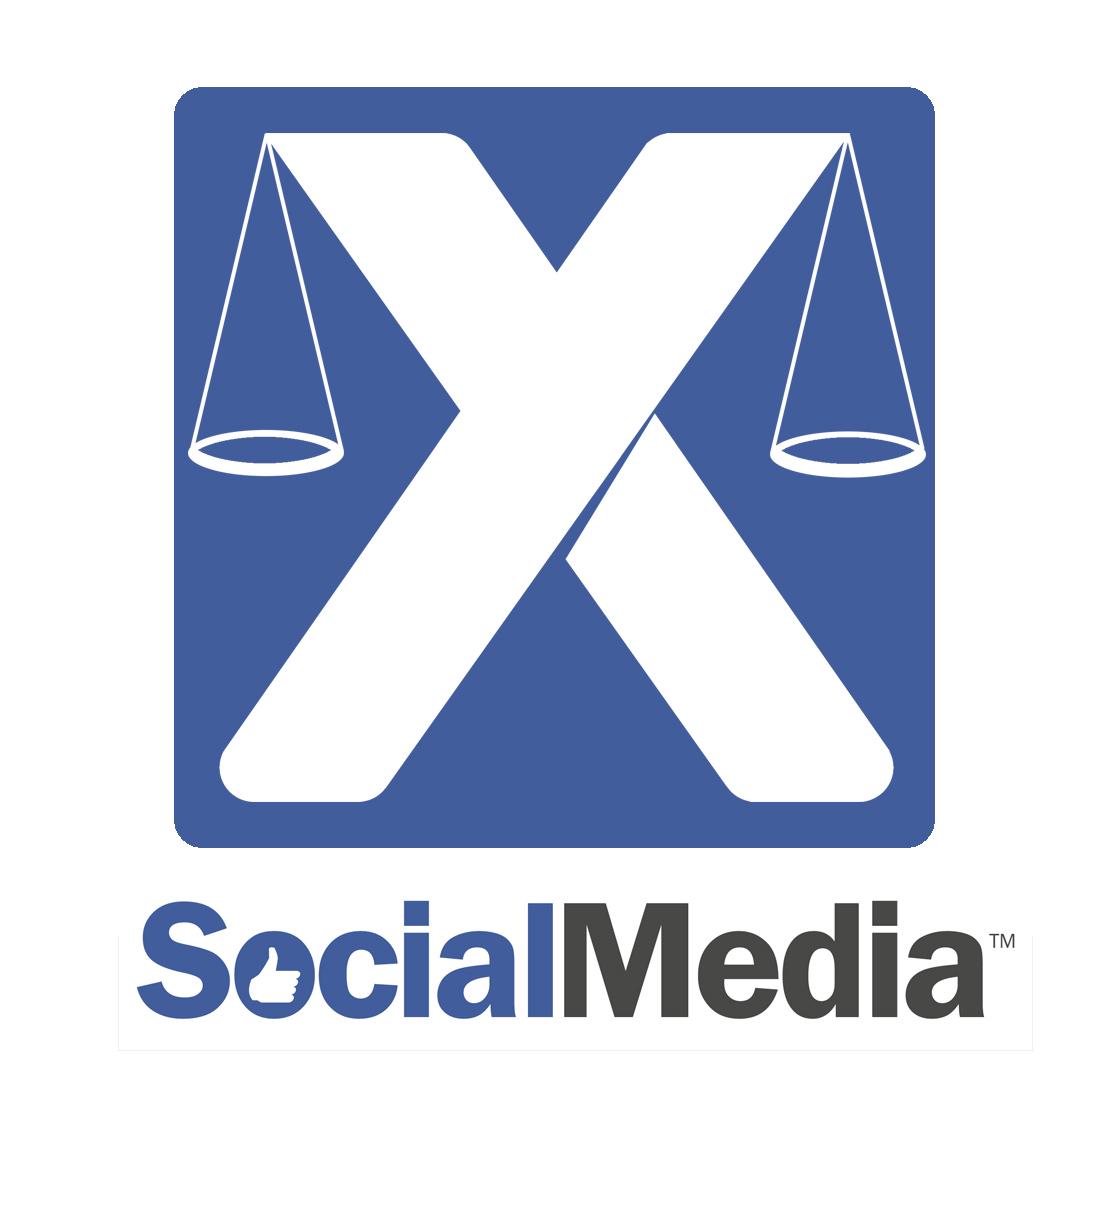 X Social Media LLC profile on Qualified.One